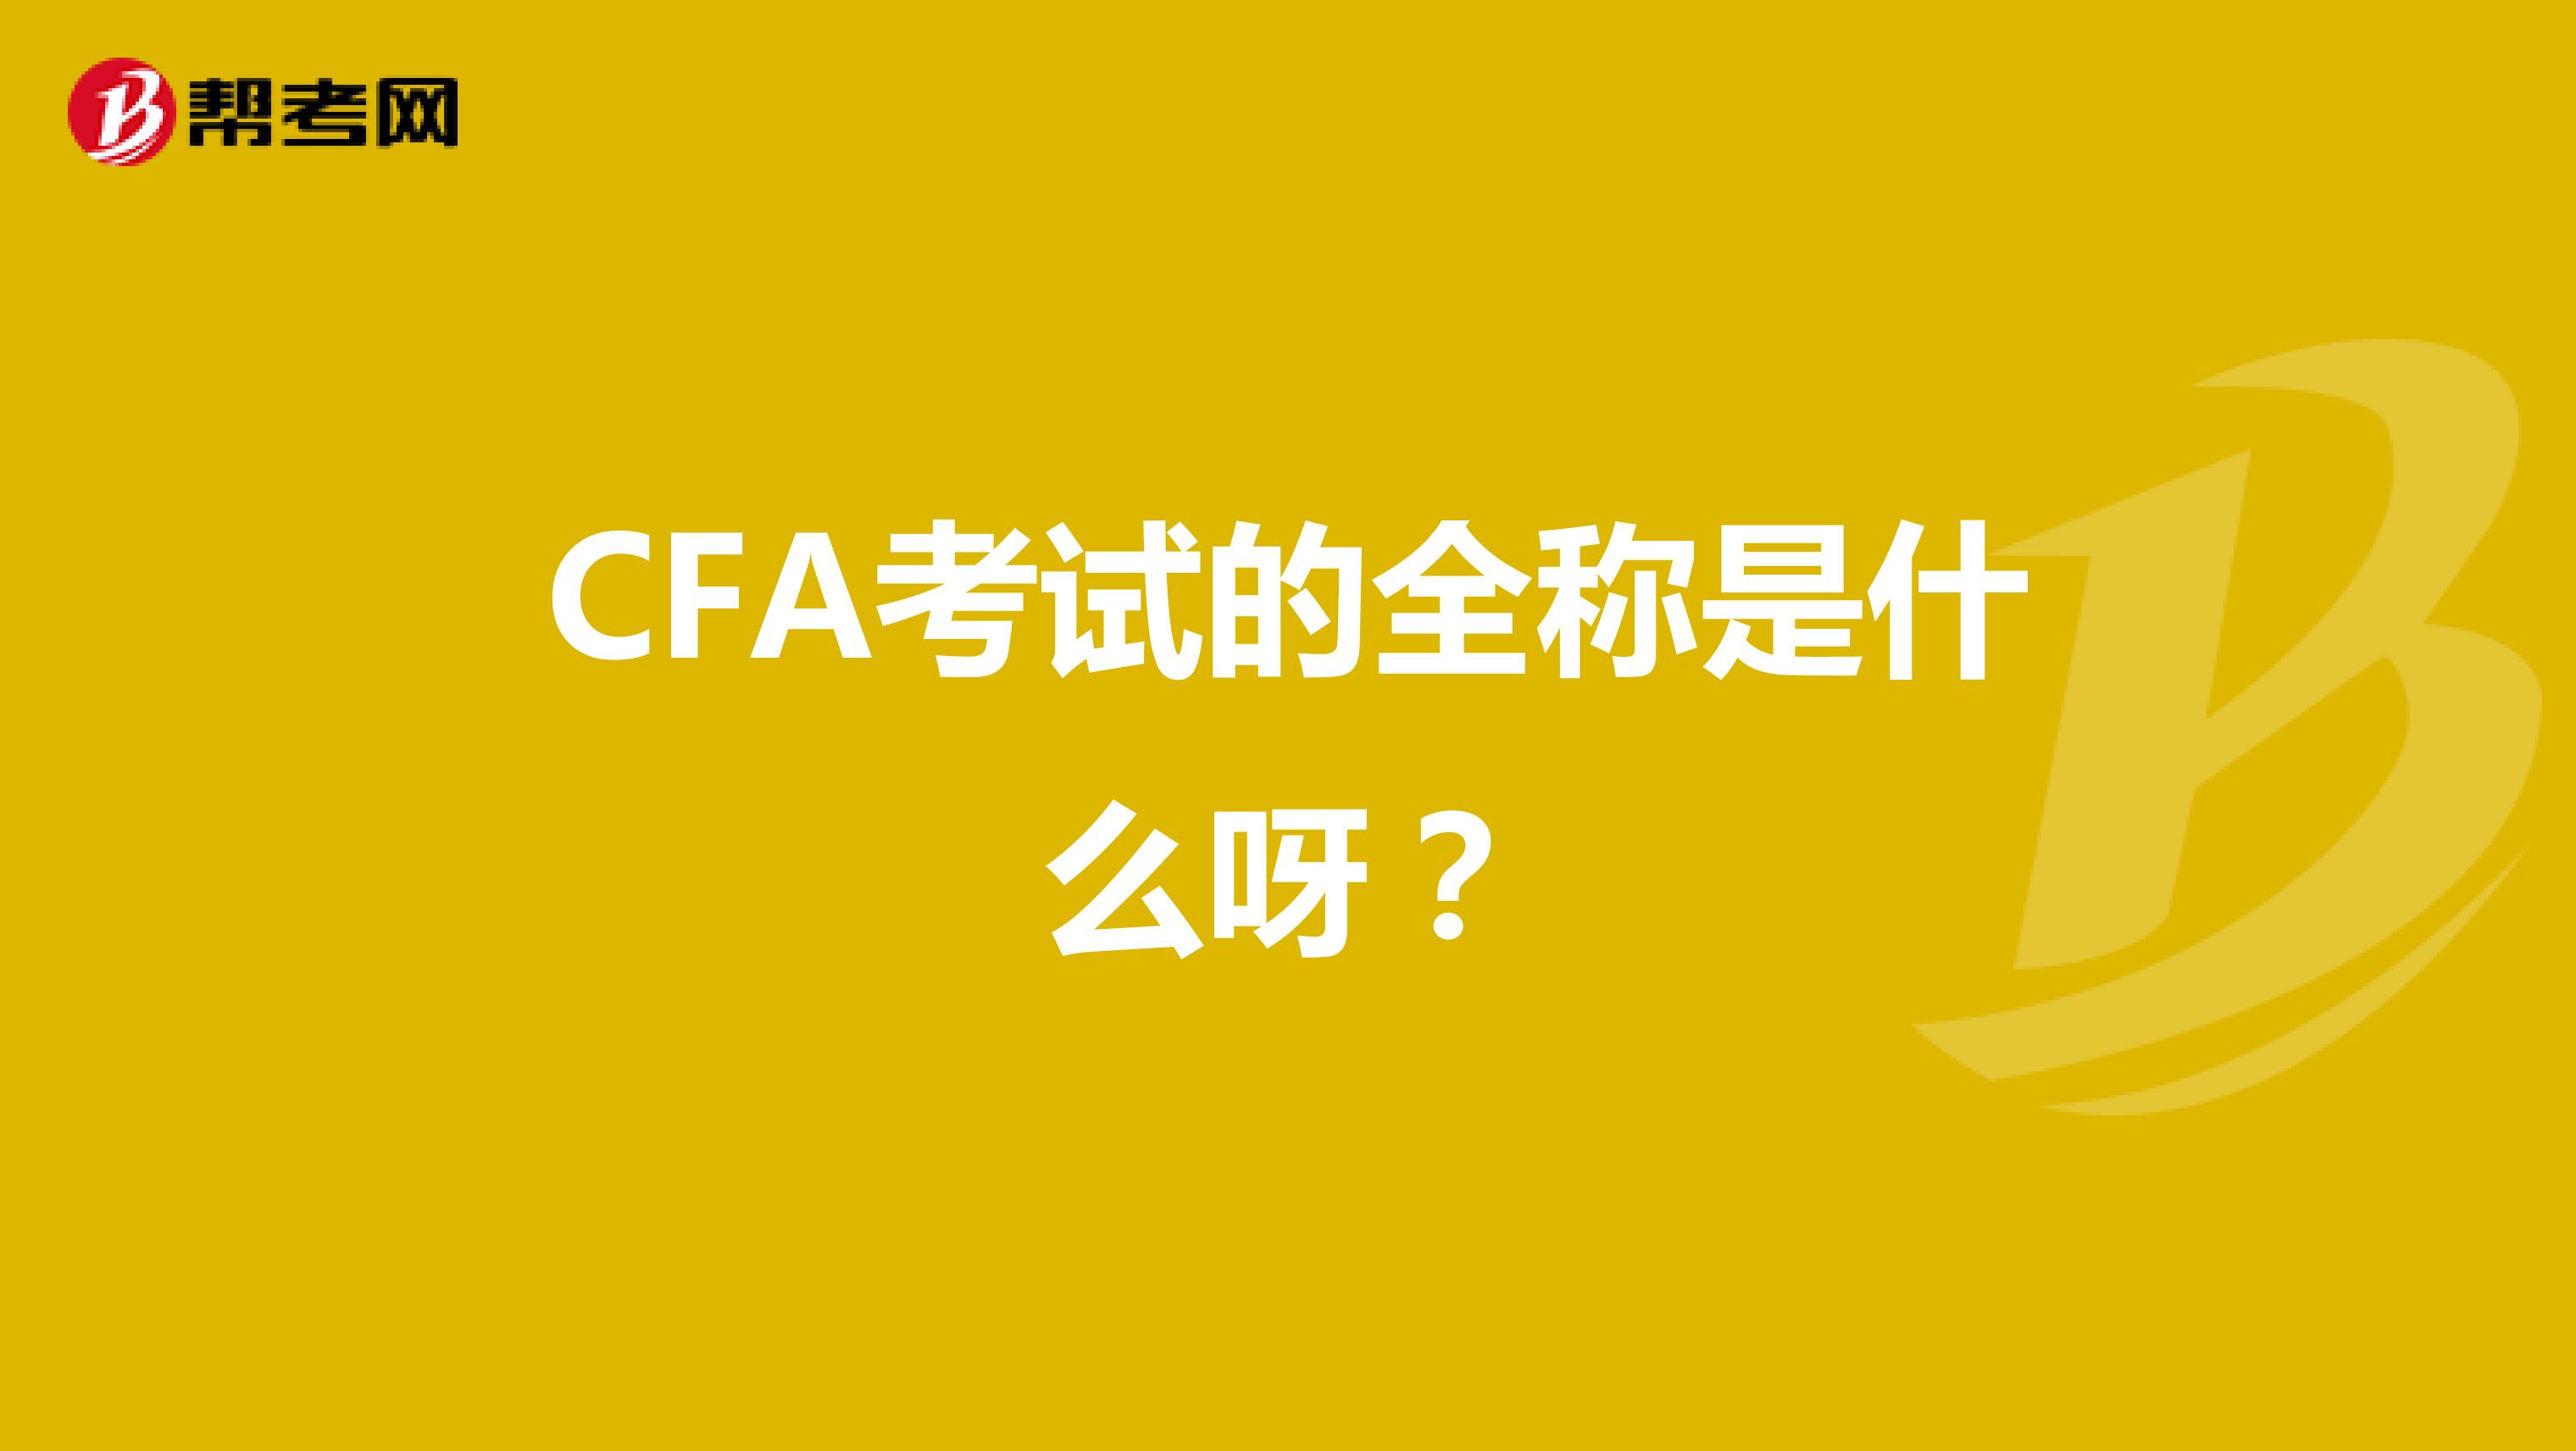 CFA考试的全称是什么呀？